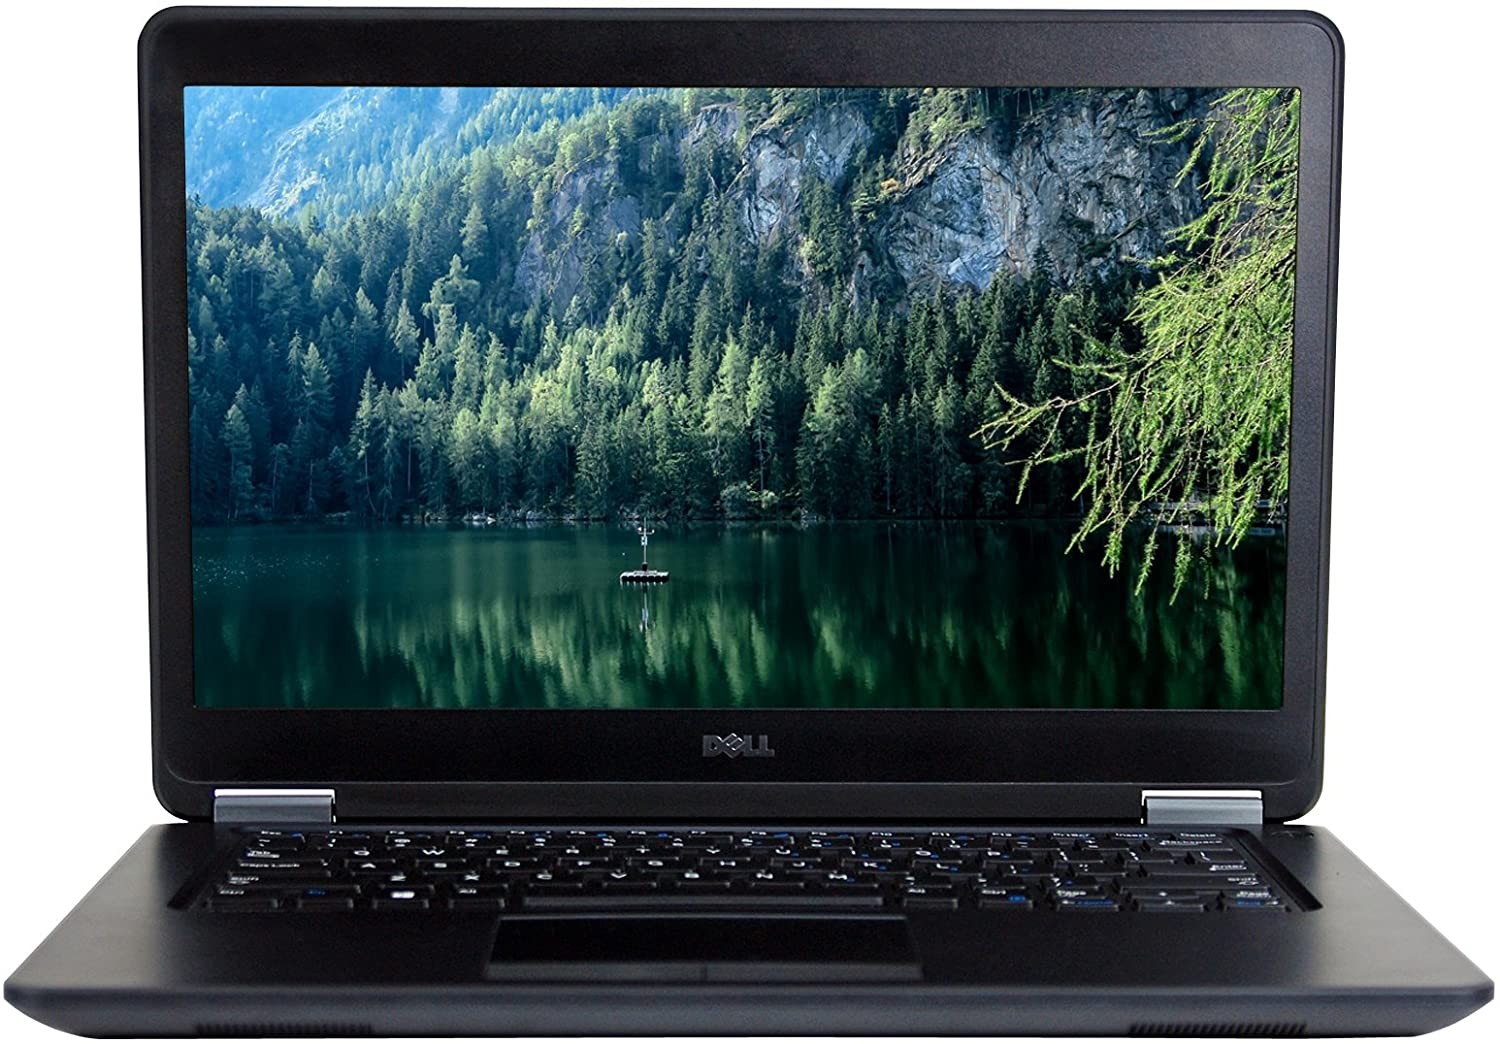 computadoras y laptops - Dell Latitude E7450 - Core i7 - 8GB RAM - 500GB HDD